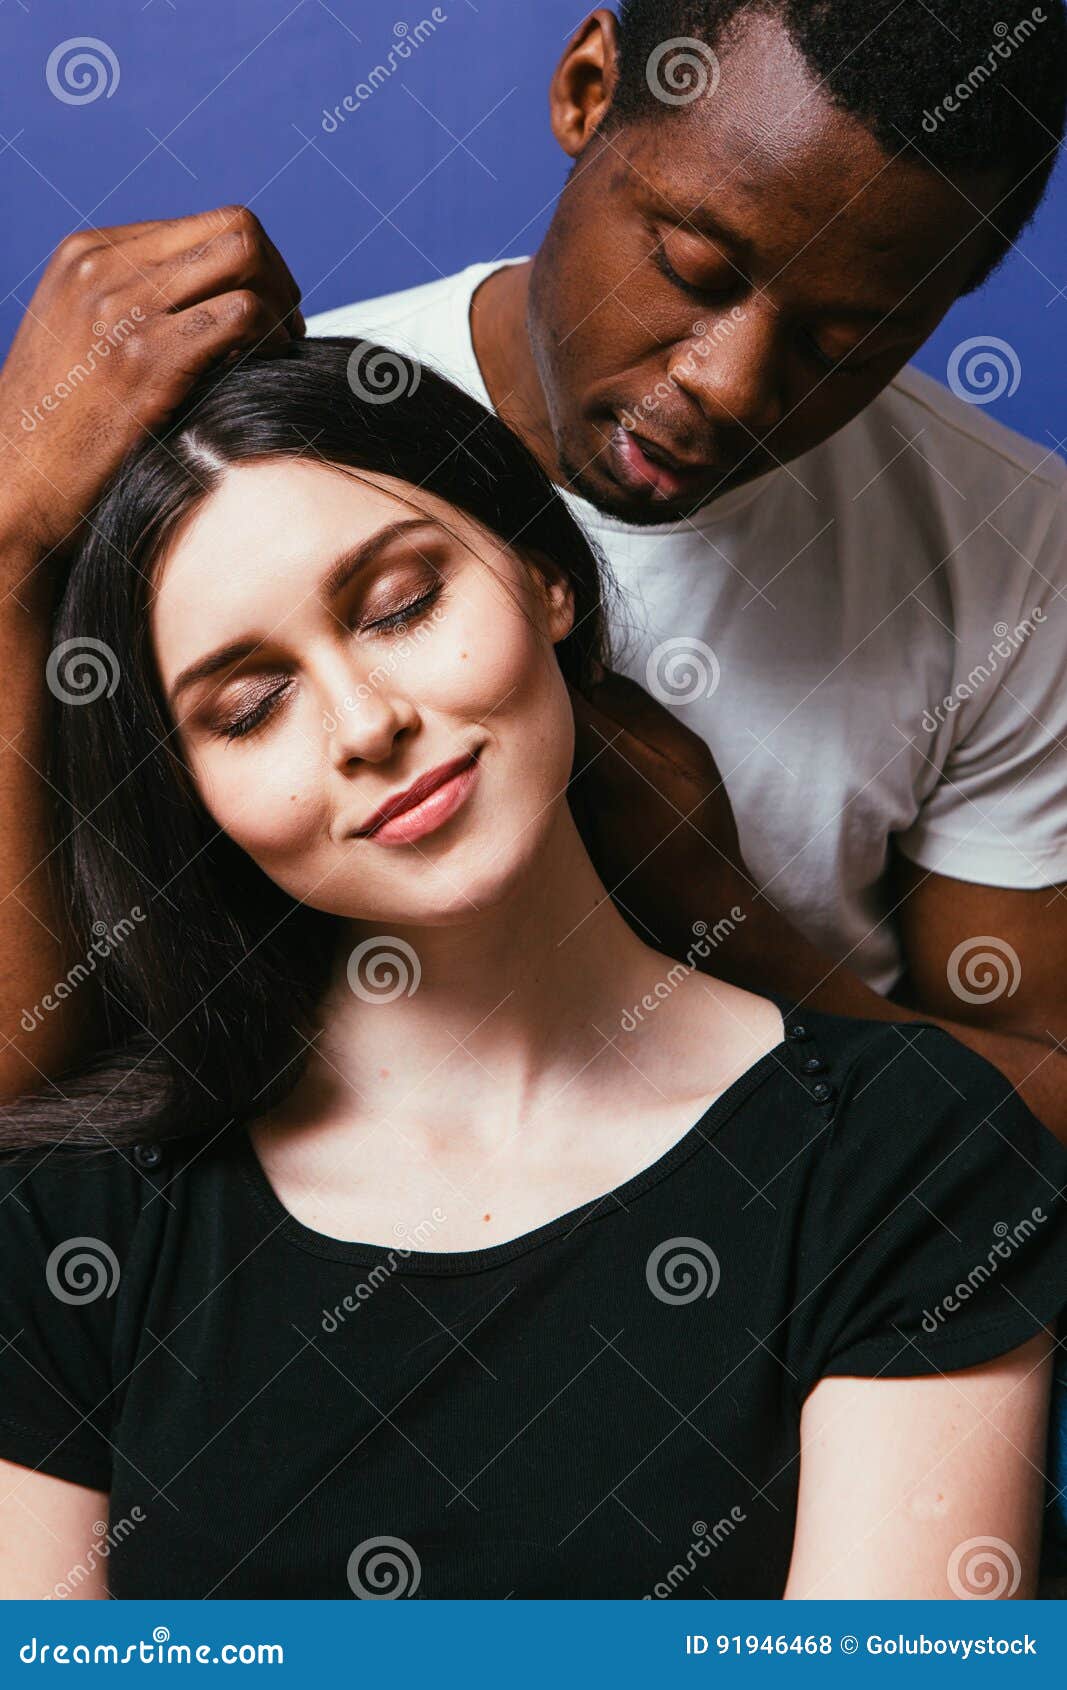 White girl dating a black man